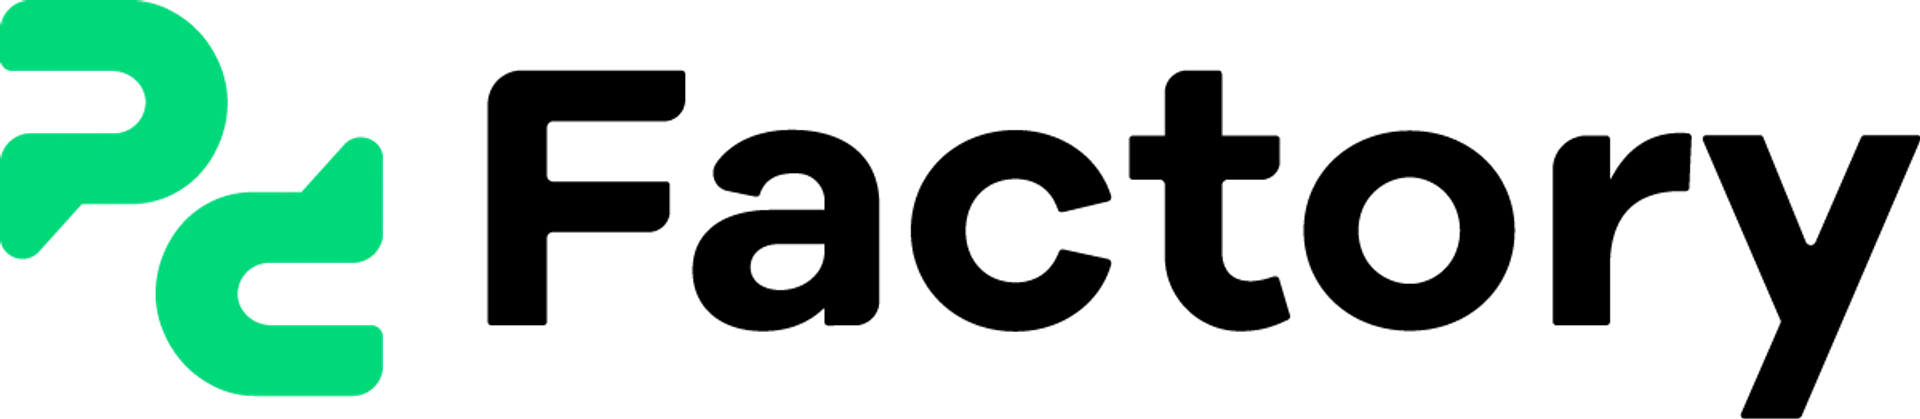 PC FACTORY logo